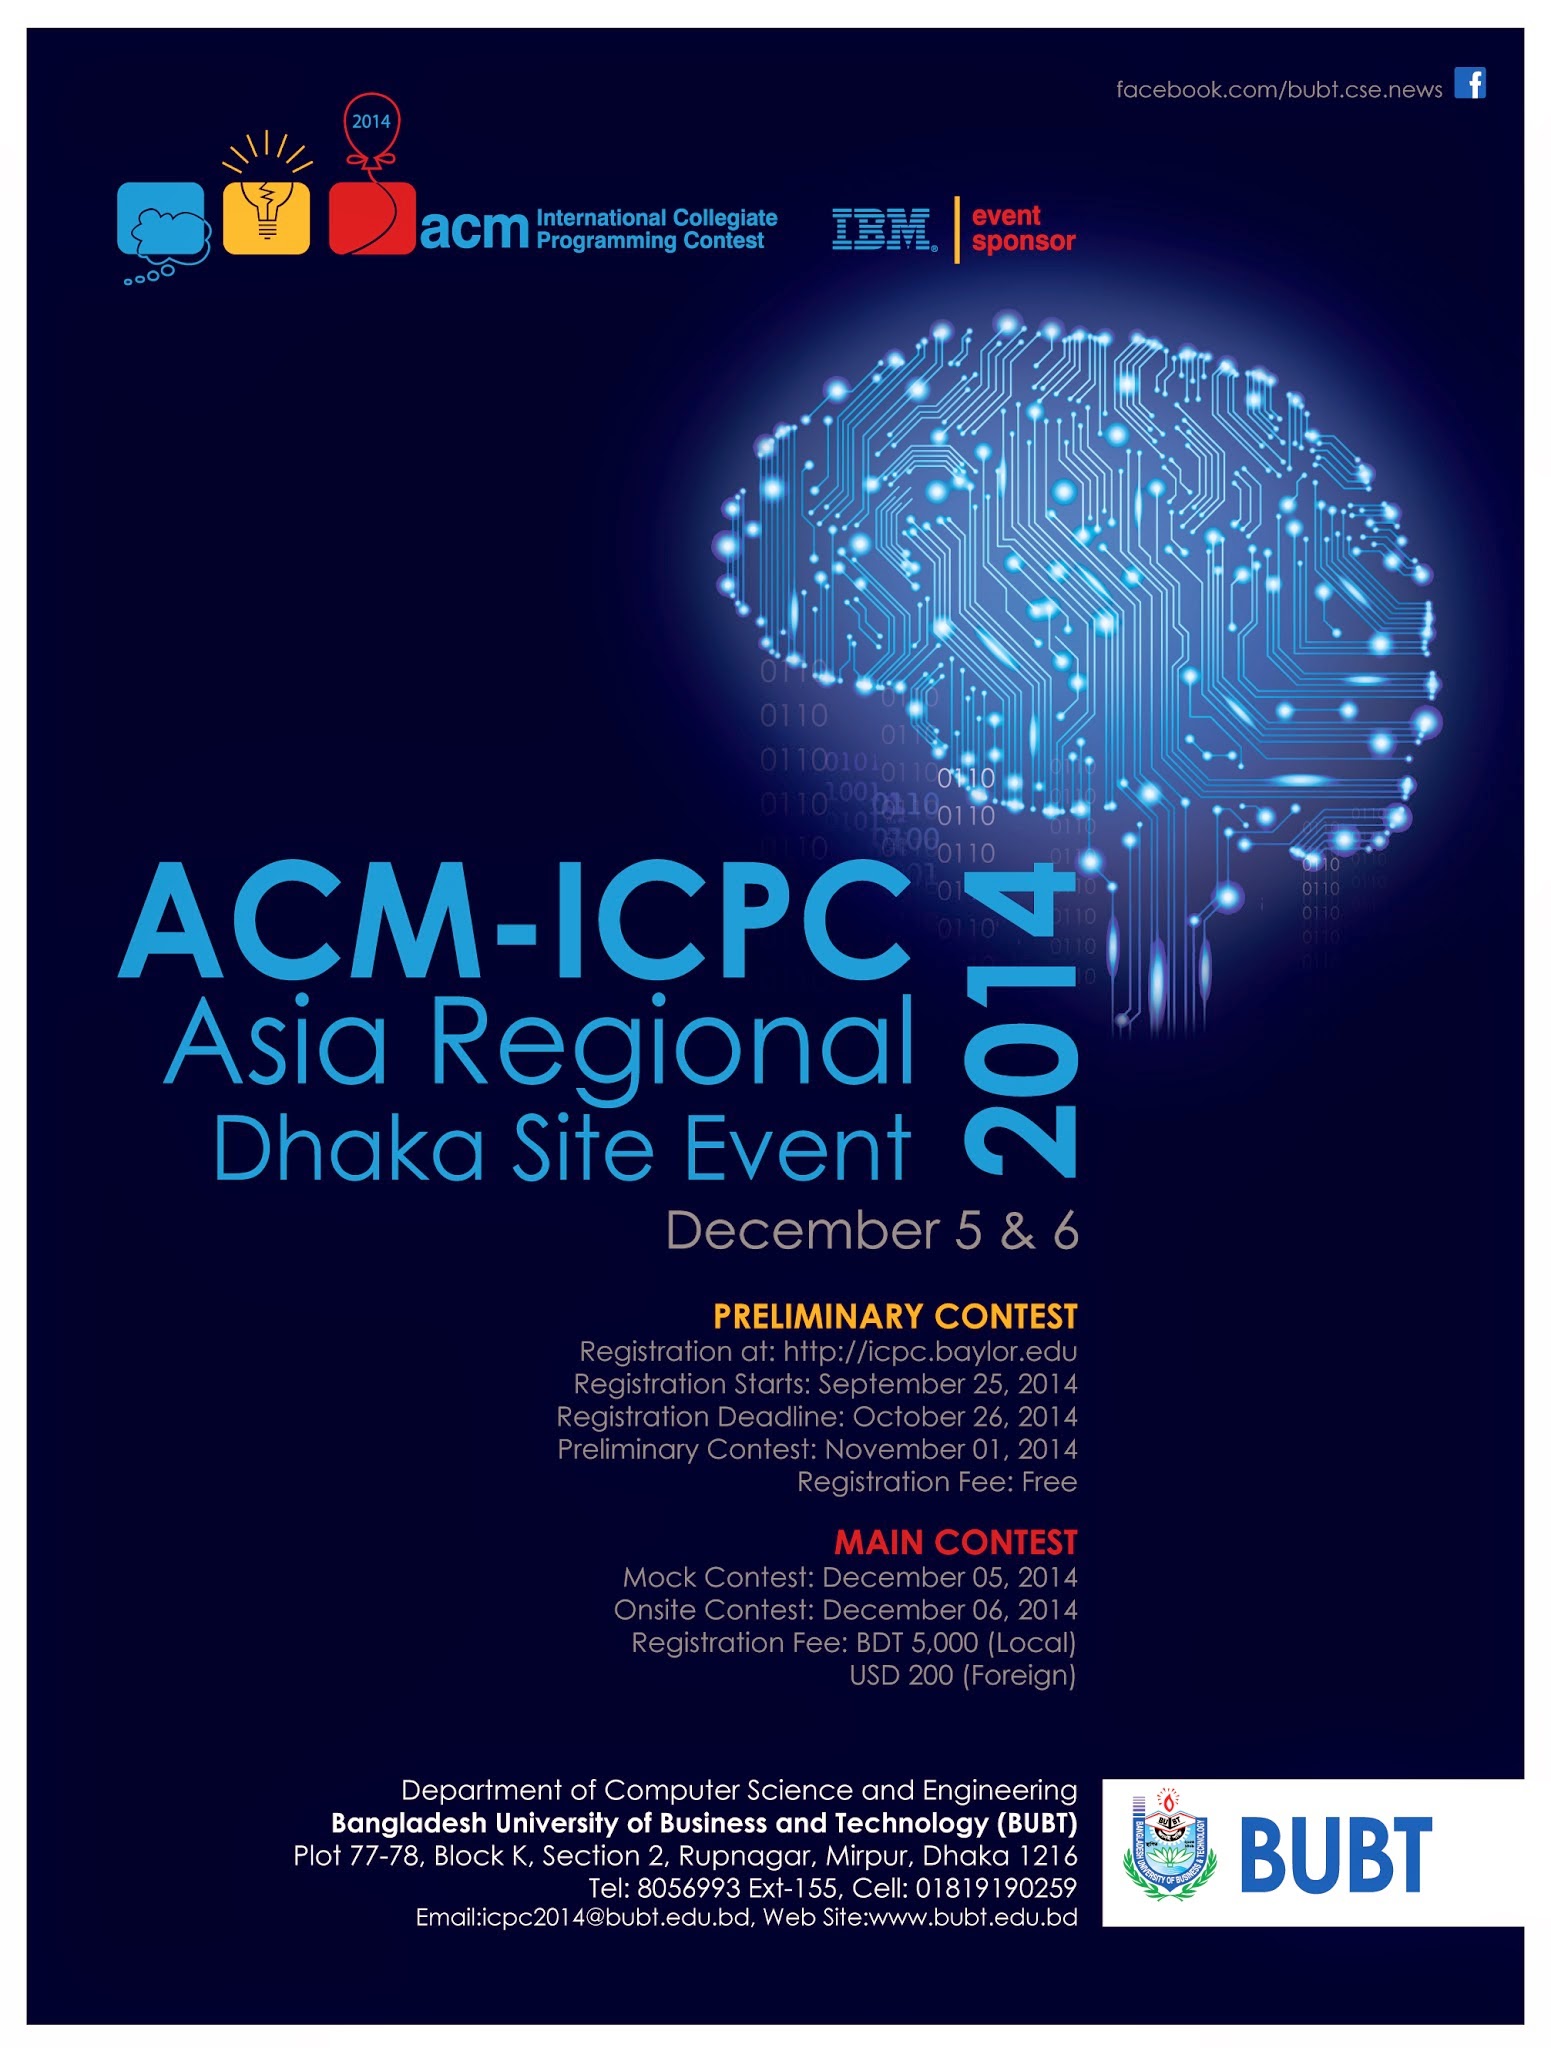 ACM-ICPC Asia Regional Dhaka Site Event